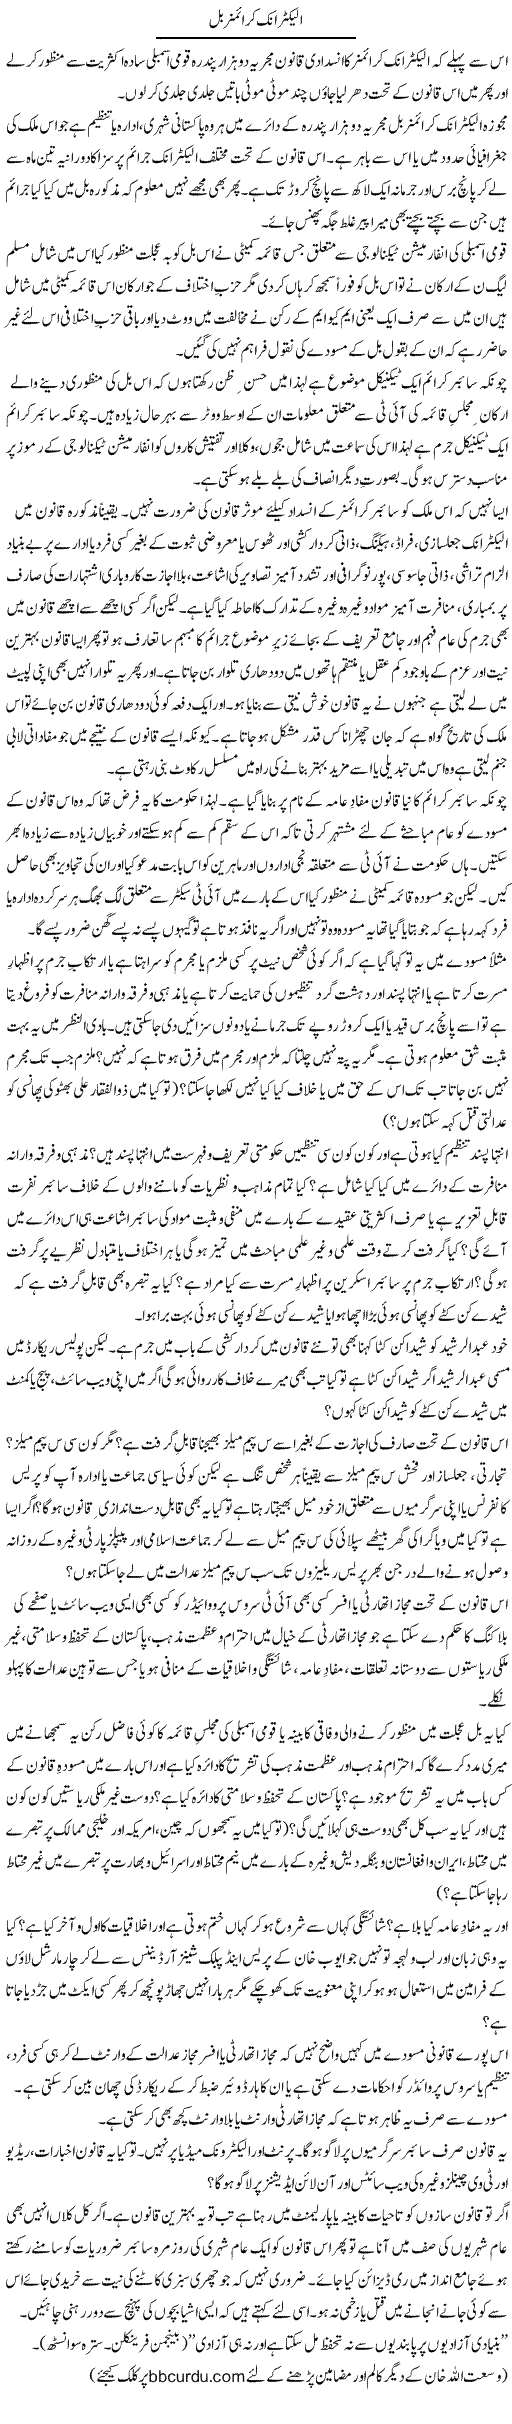 Electronic Crimes Bill | Wusat Ullah Khan | Daily Urdu Columns